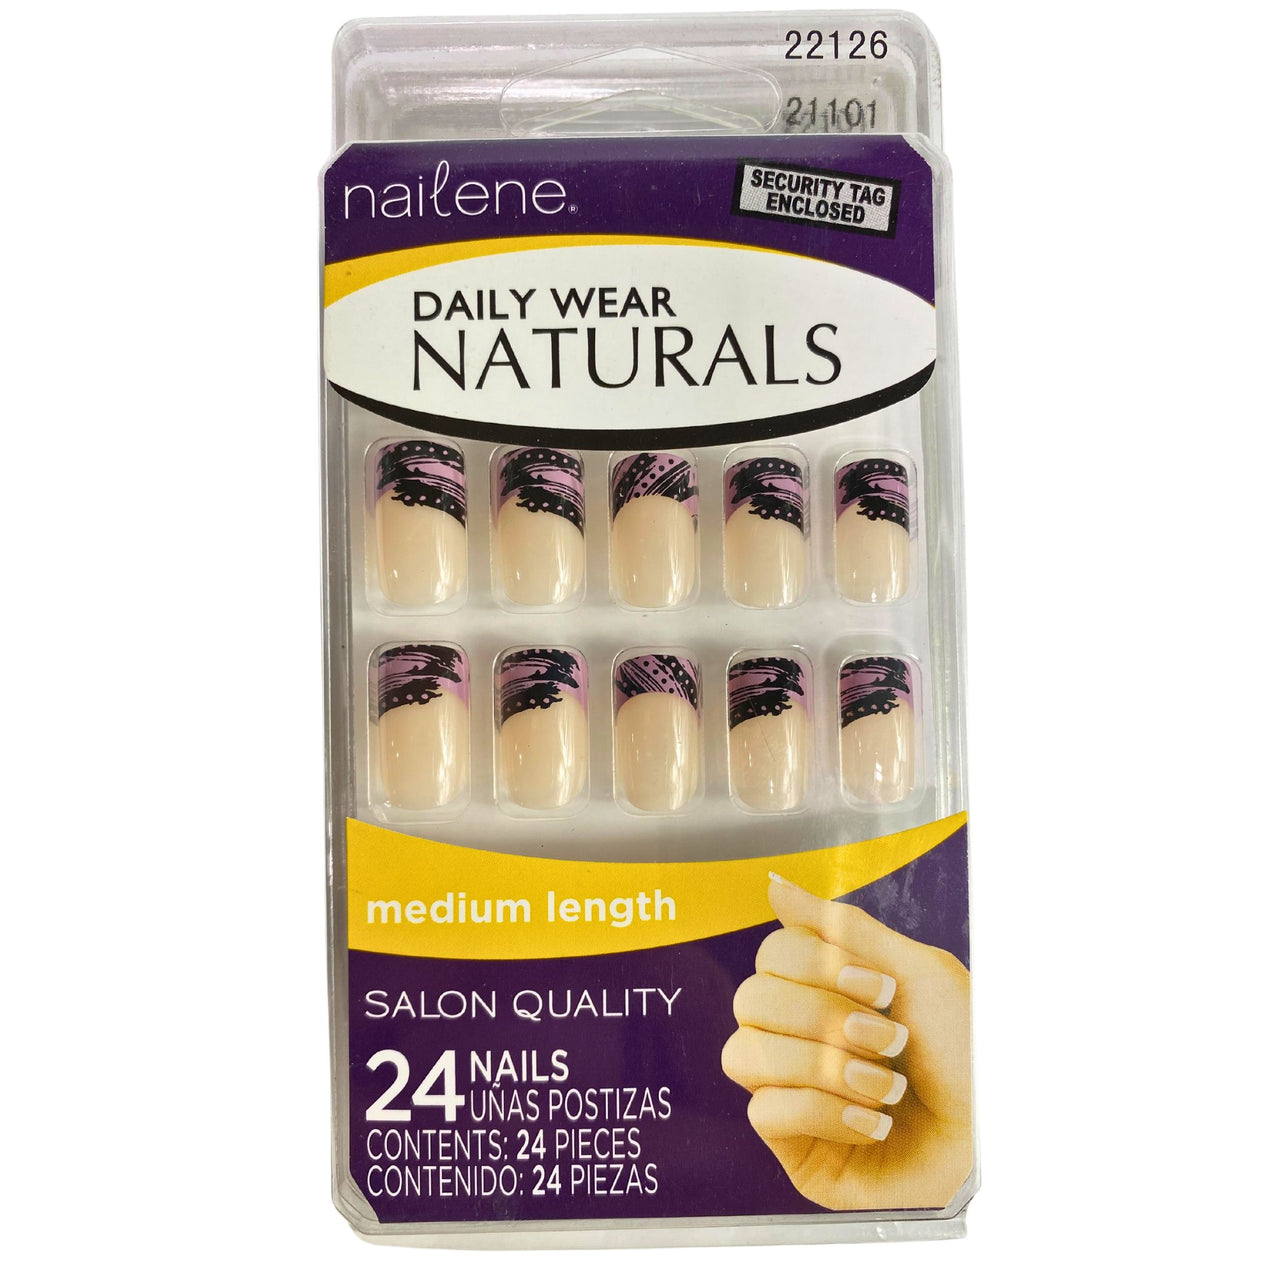 Nailene Daily Wear Naturals Salon Quality 24 Nails